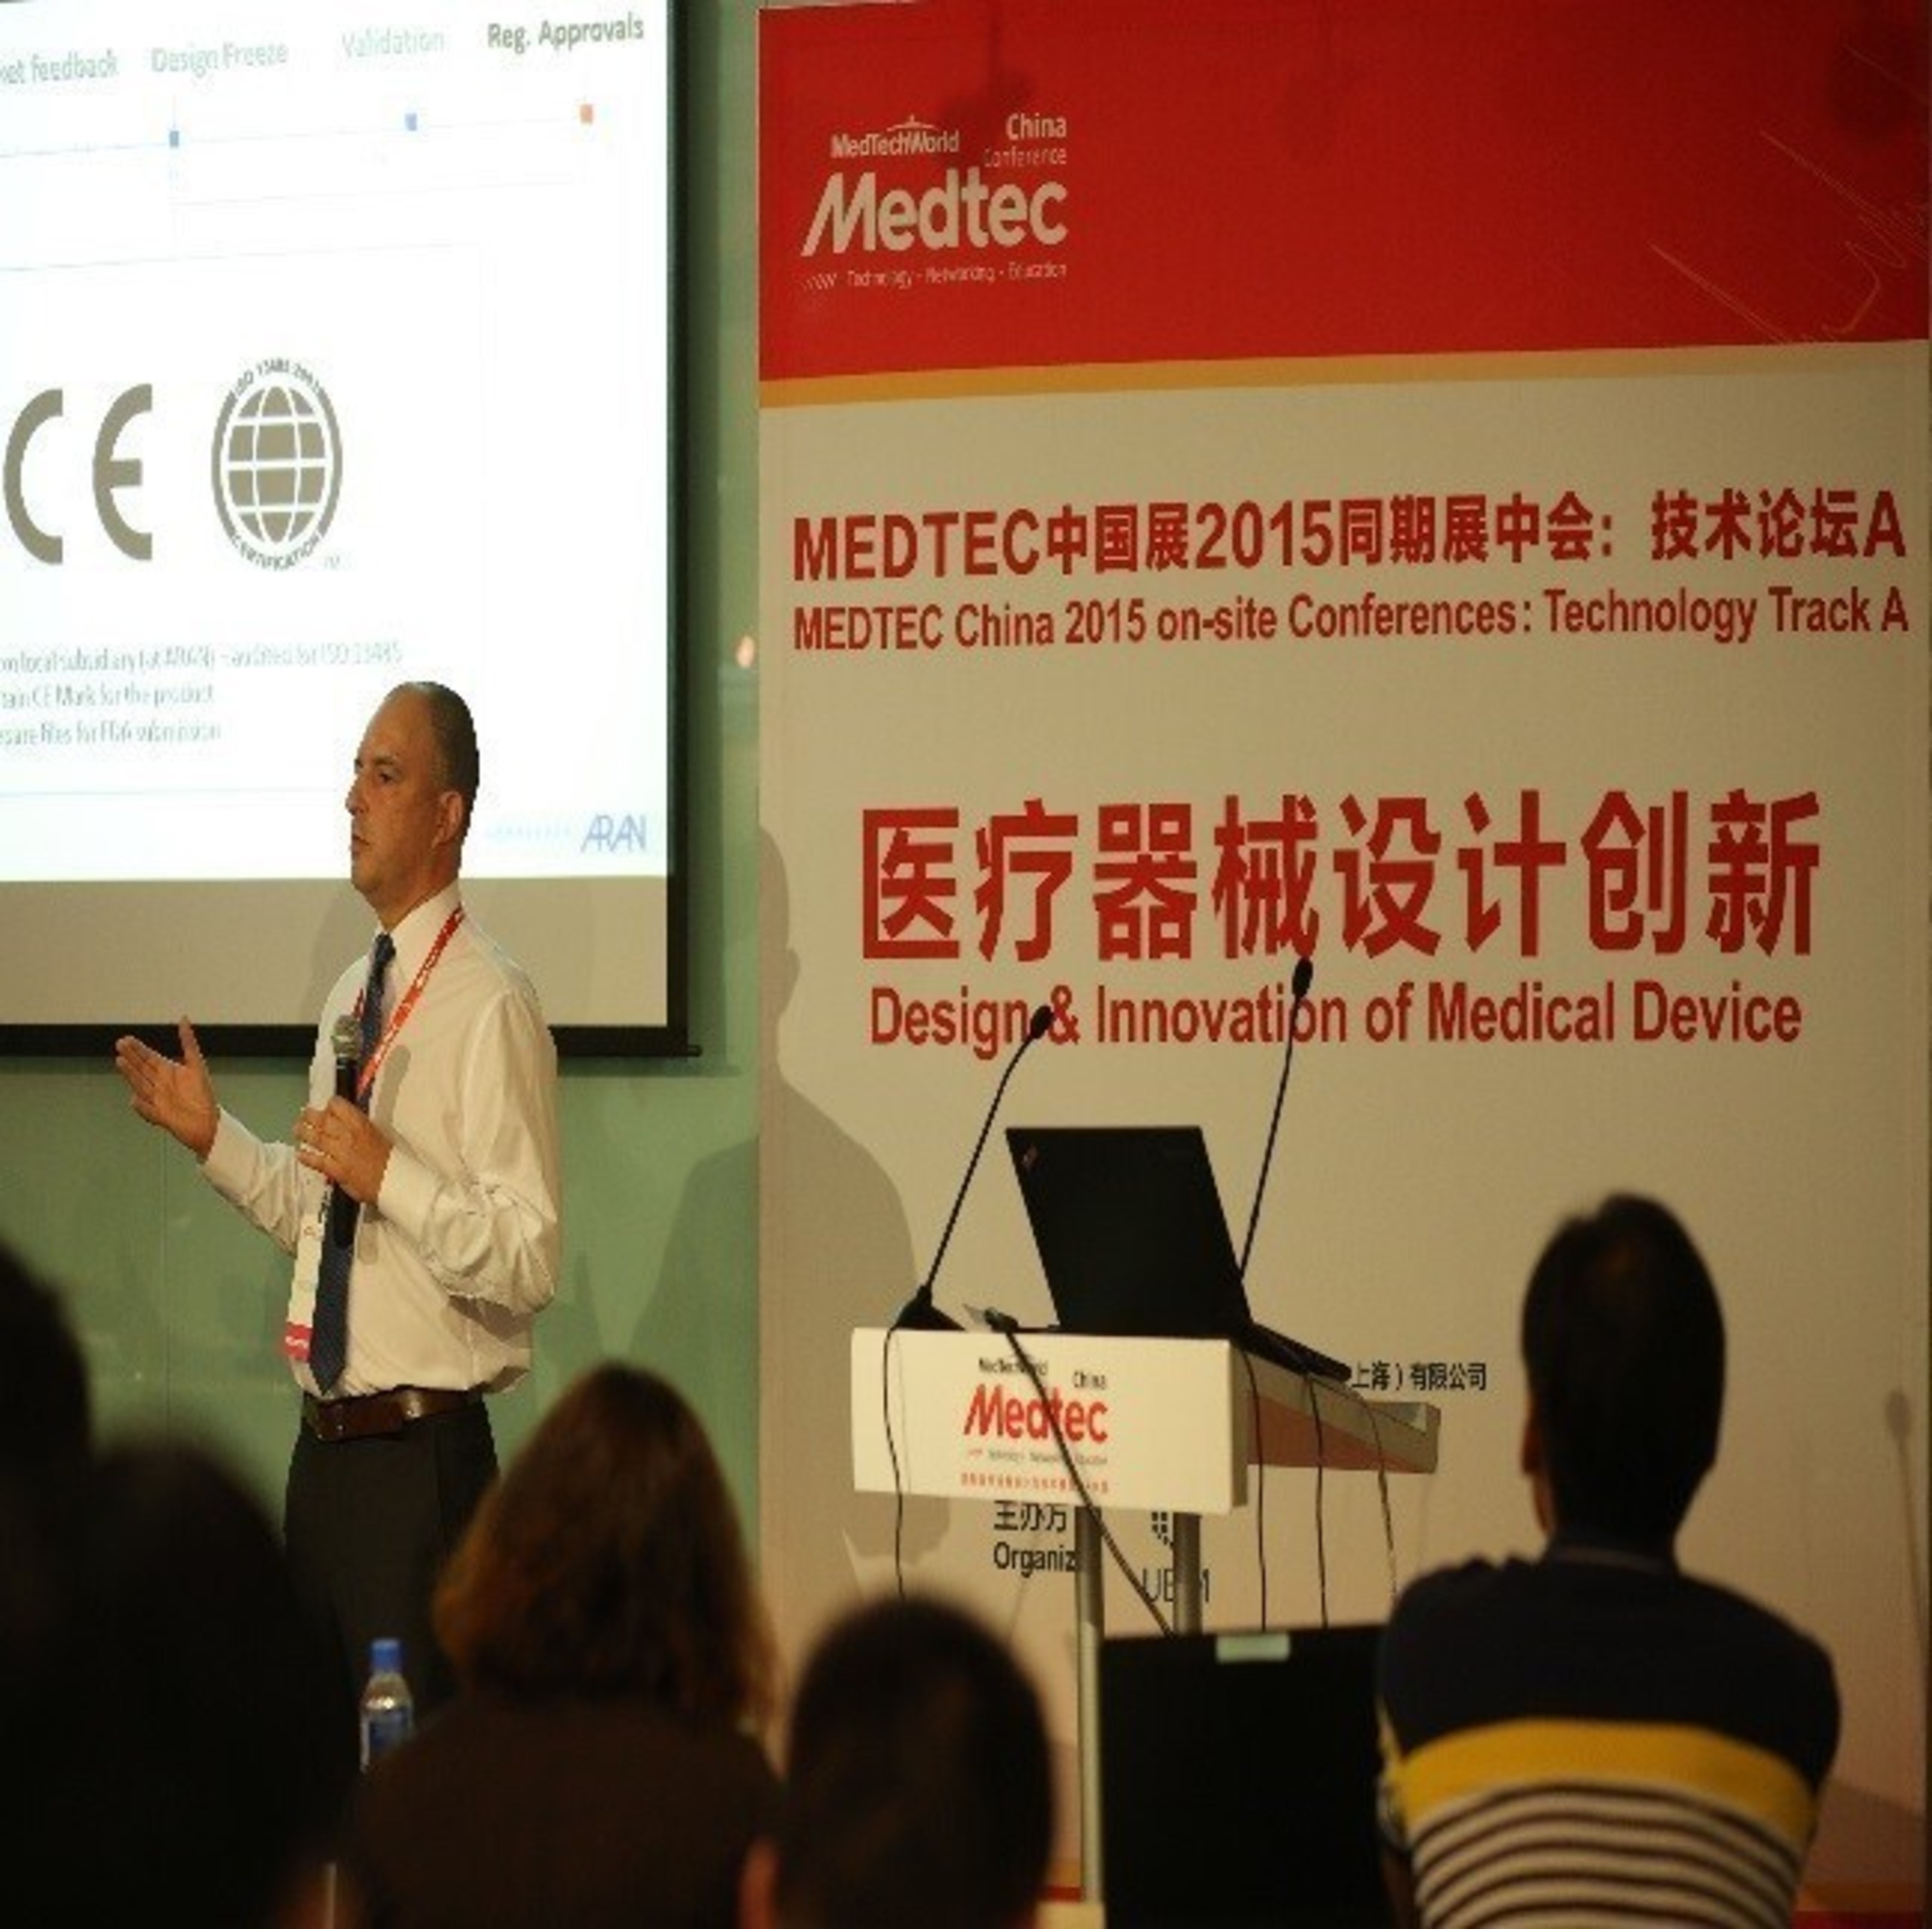 Medtec China 2015